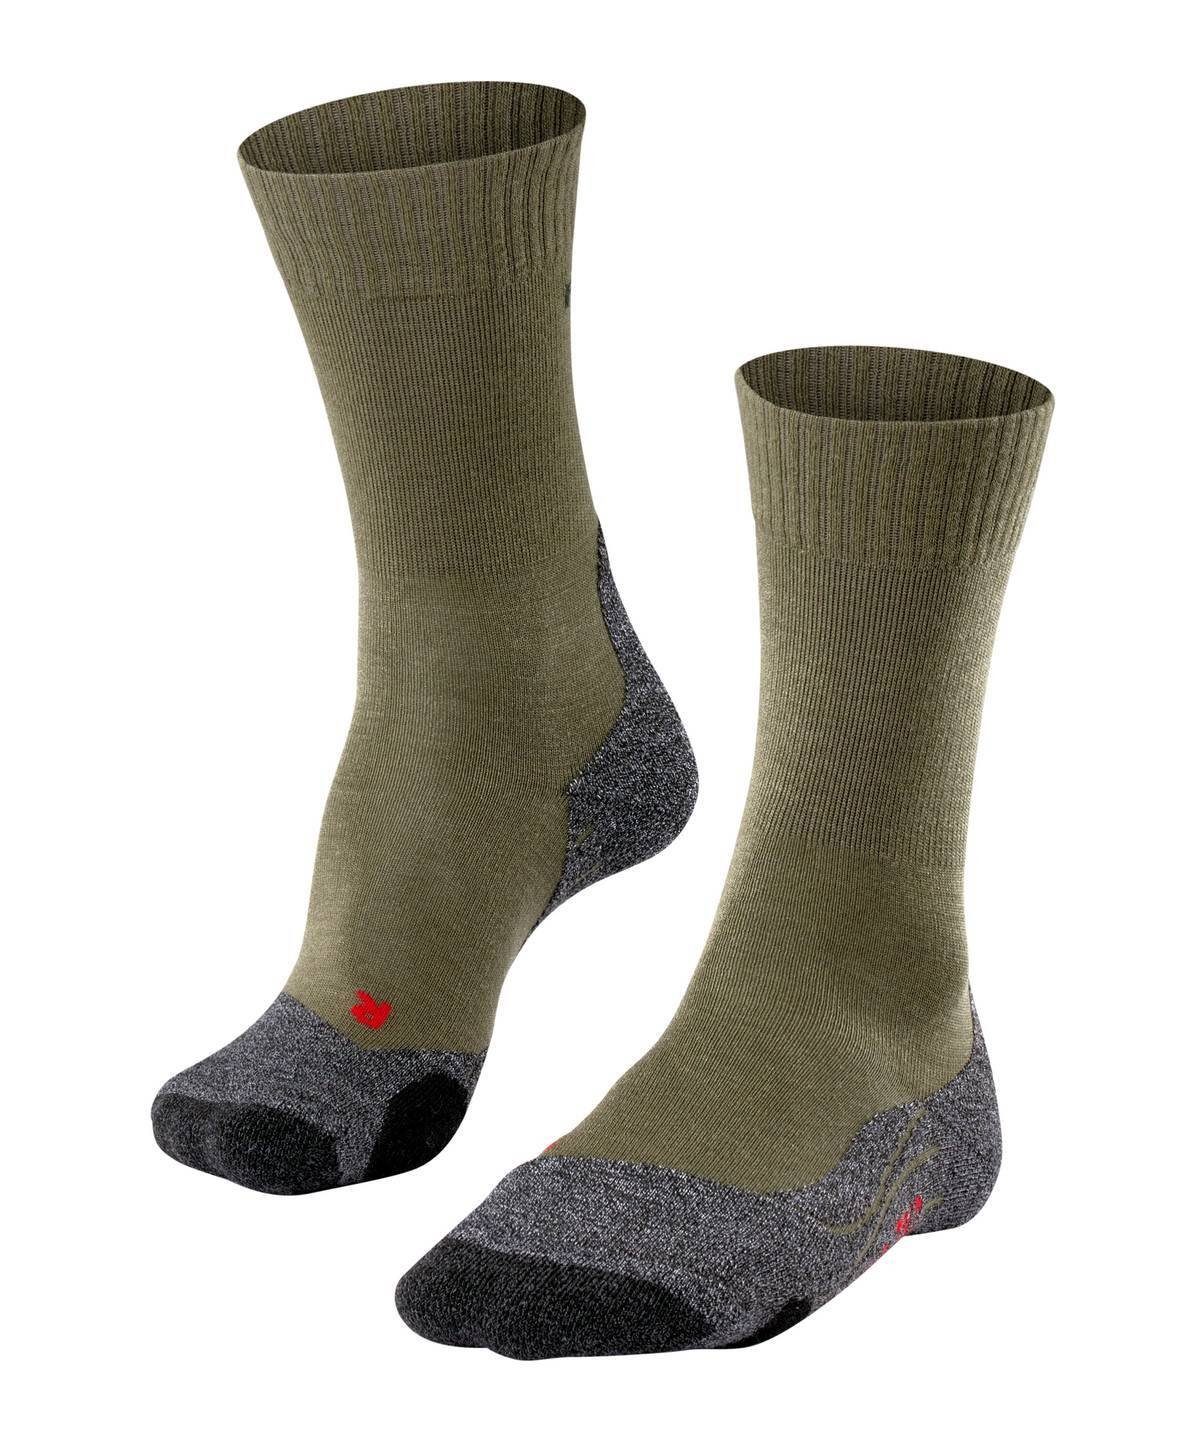 FALKE Sportsocken Herren Socken - Trekking Socken TK2, Polsterung Olivgrün